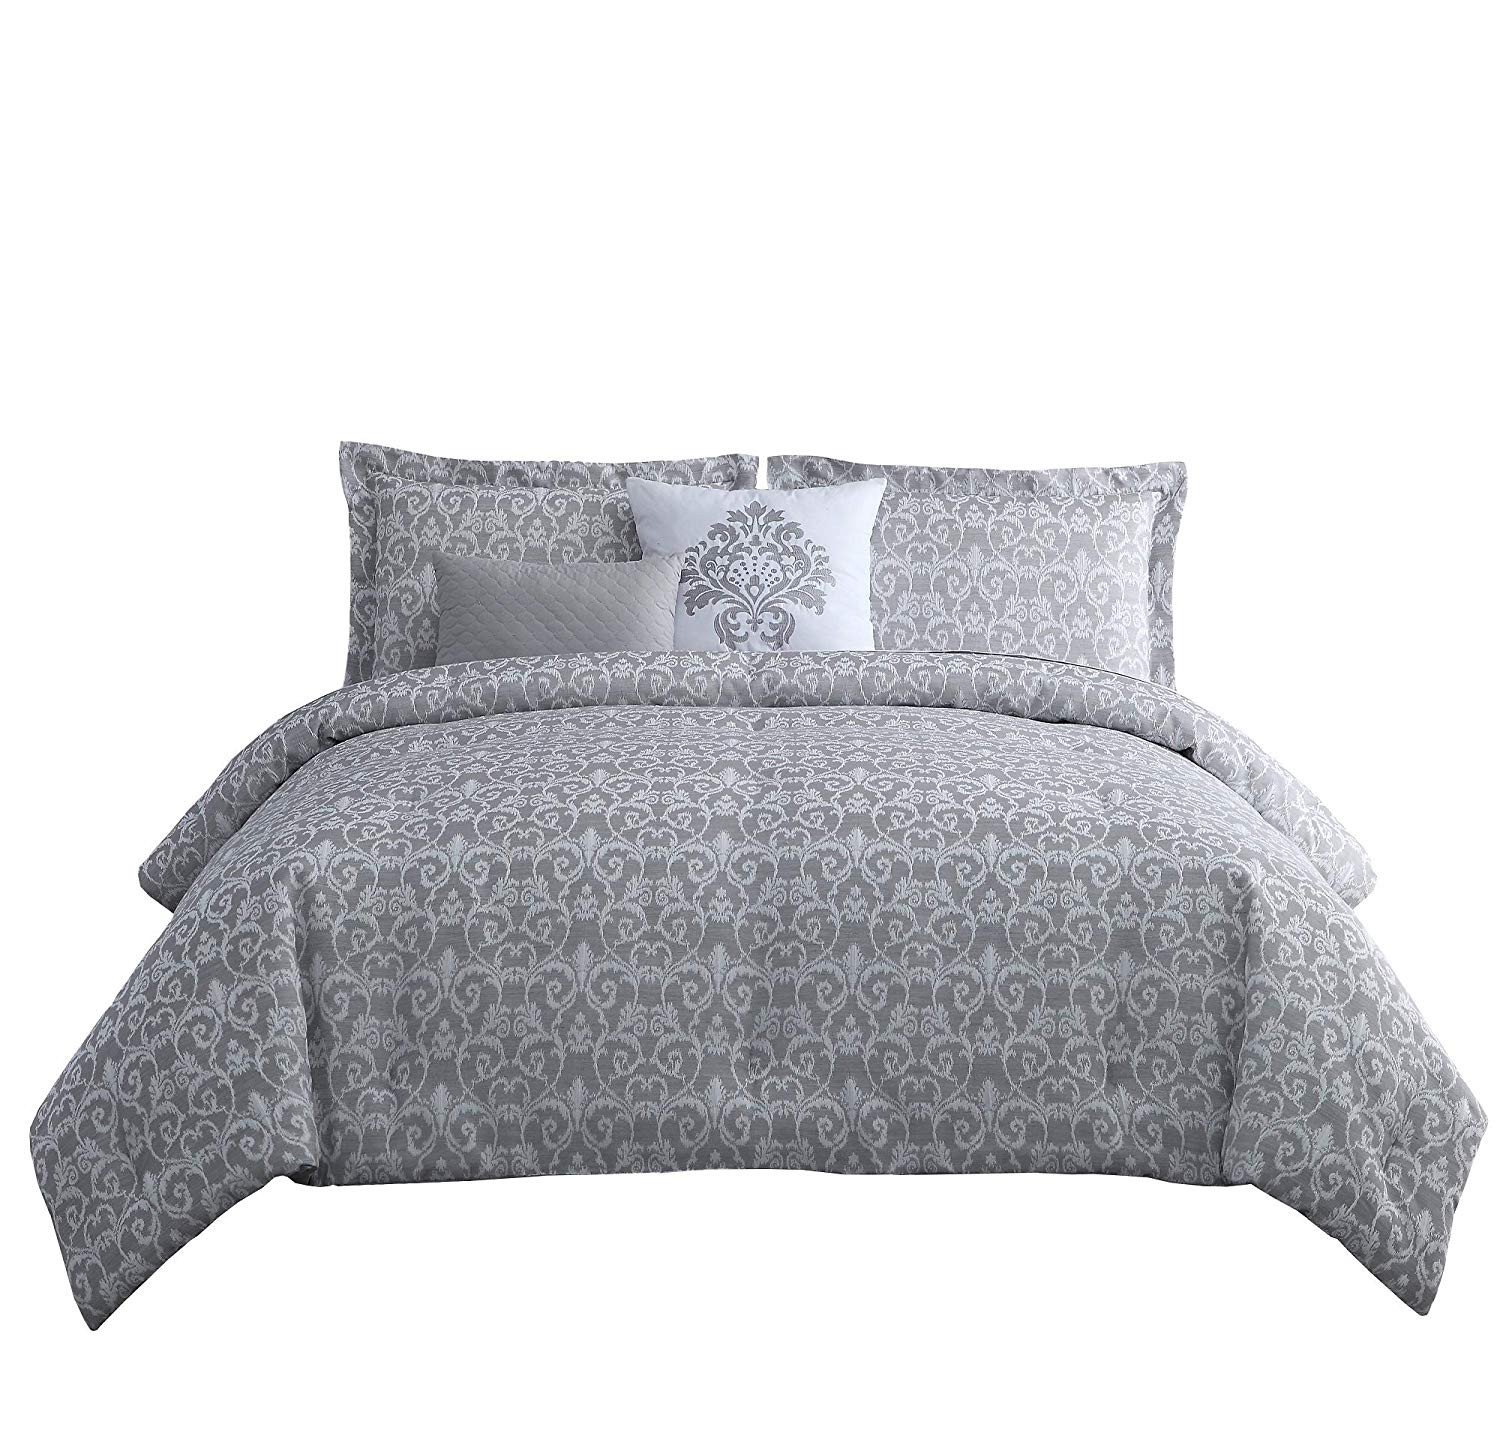 King Bedroom Comforter Set Beautiful Chezmoi Collection Julian 3 Piece Gray White Down Alternative forter Set King